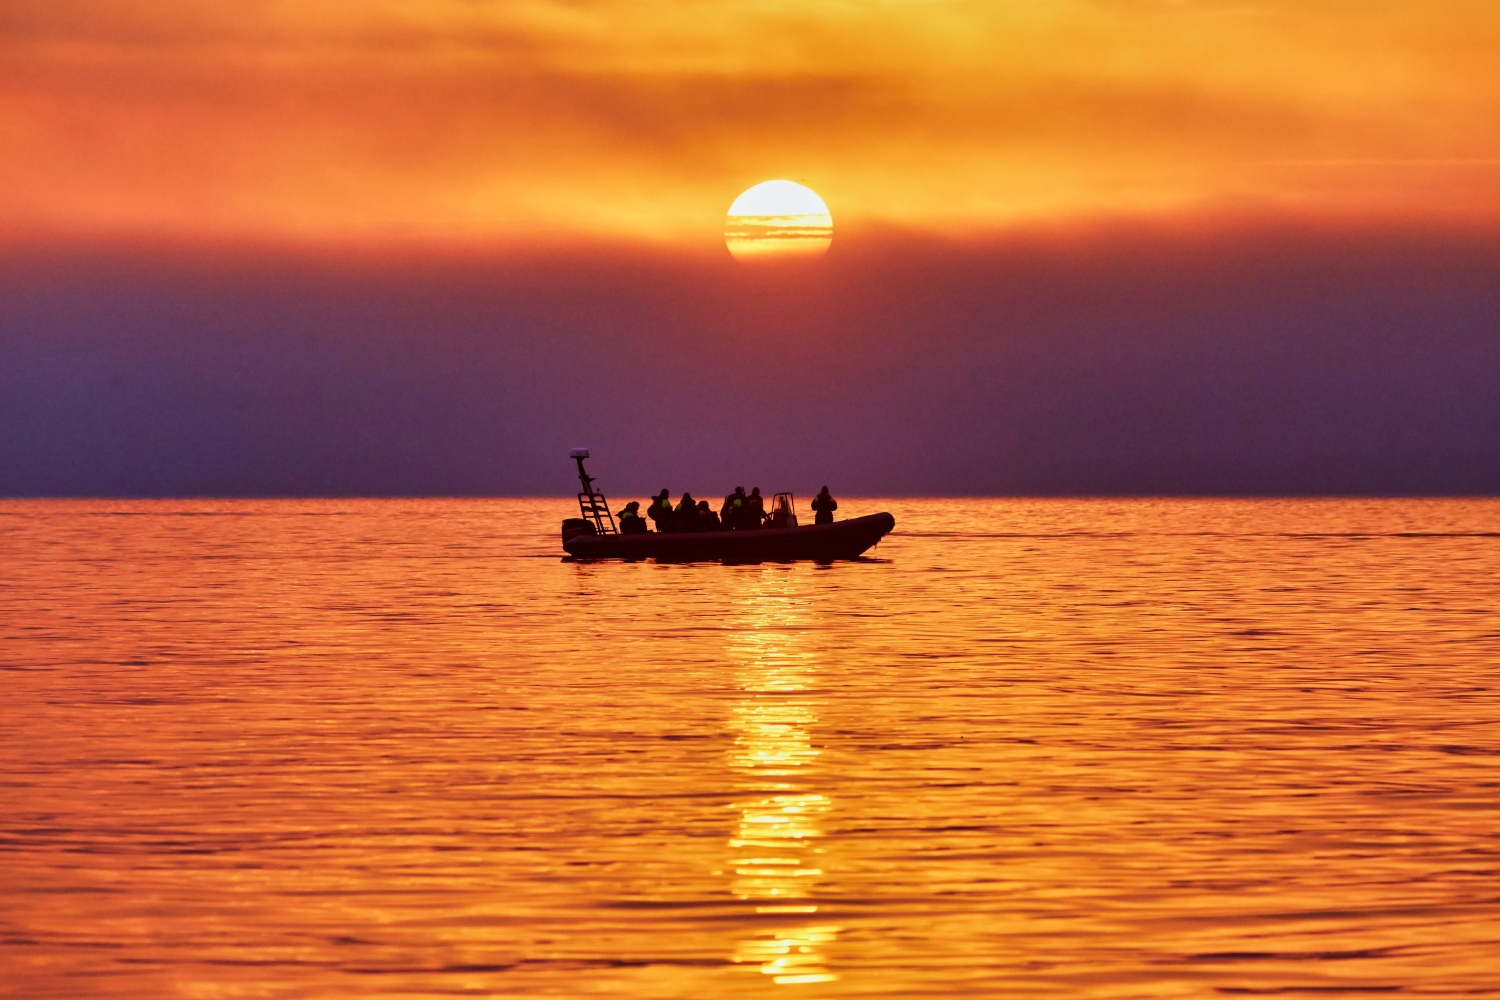 Midnight Sun photo safari by RIB boat